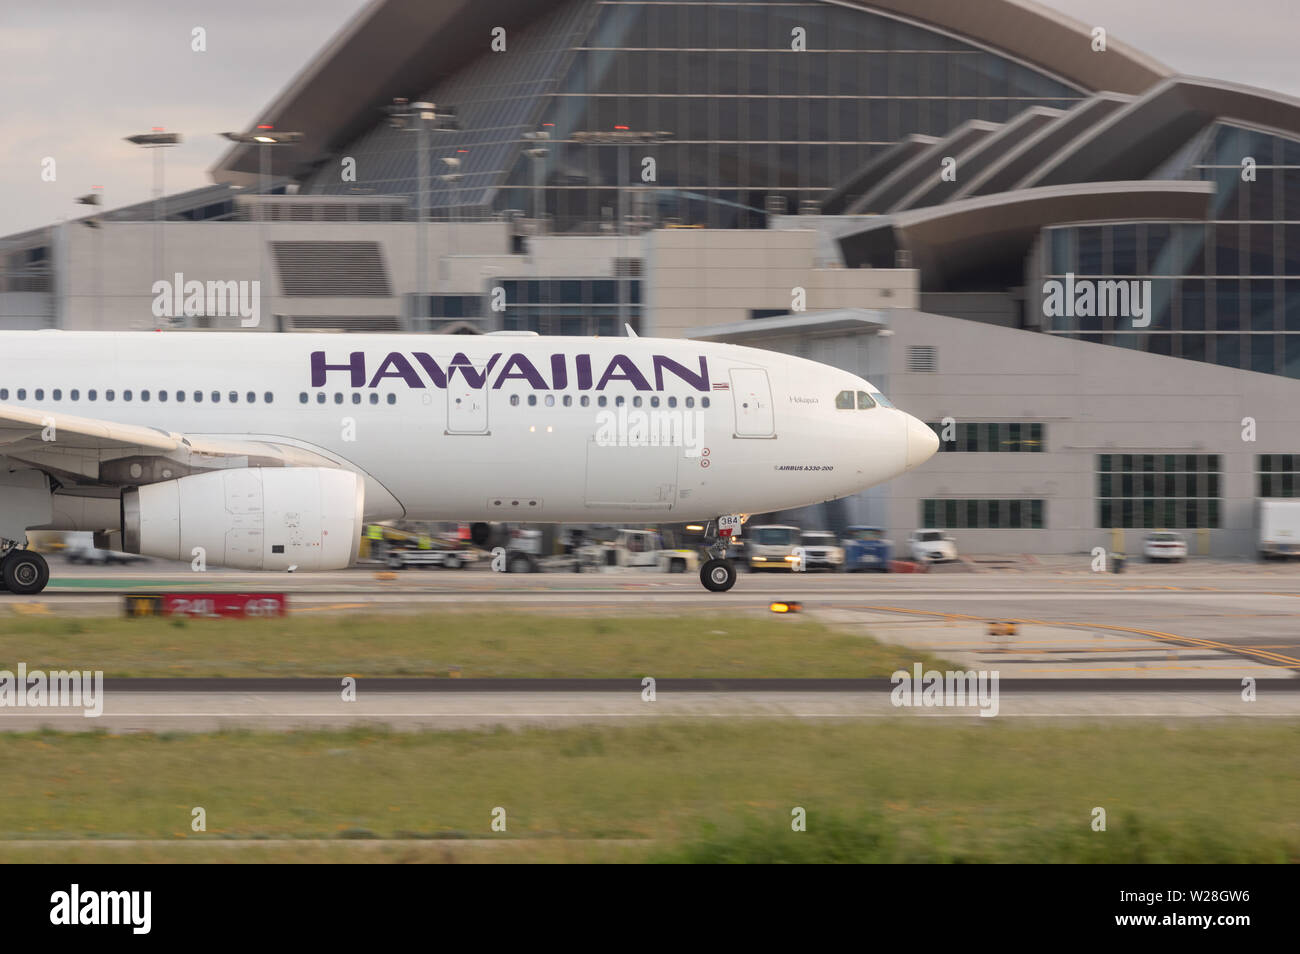 Hawaiian Airlines Airbus A330, numéro d'immatriculation N384HA, décollant de l'aéroport international de Los Angeles. Banque D'Images